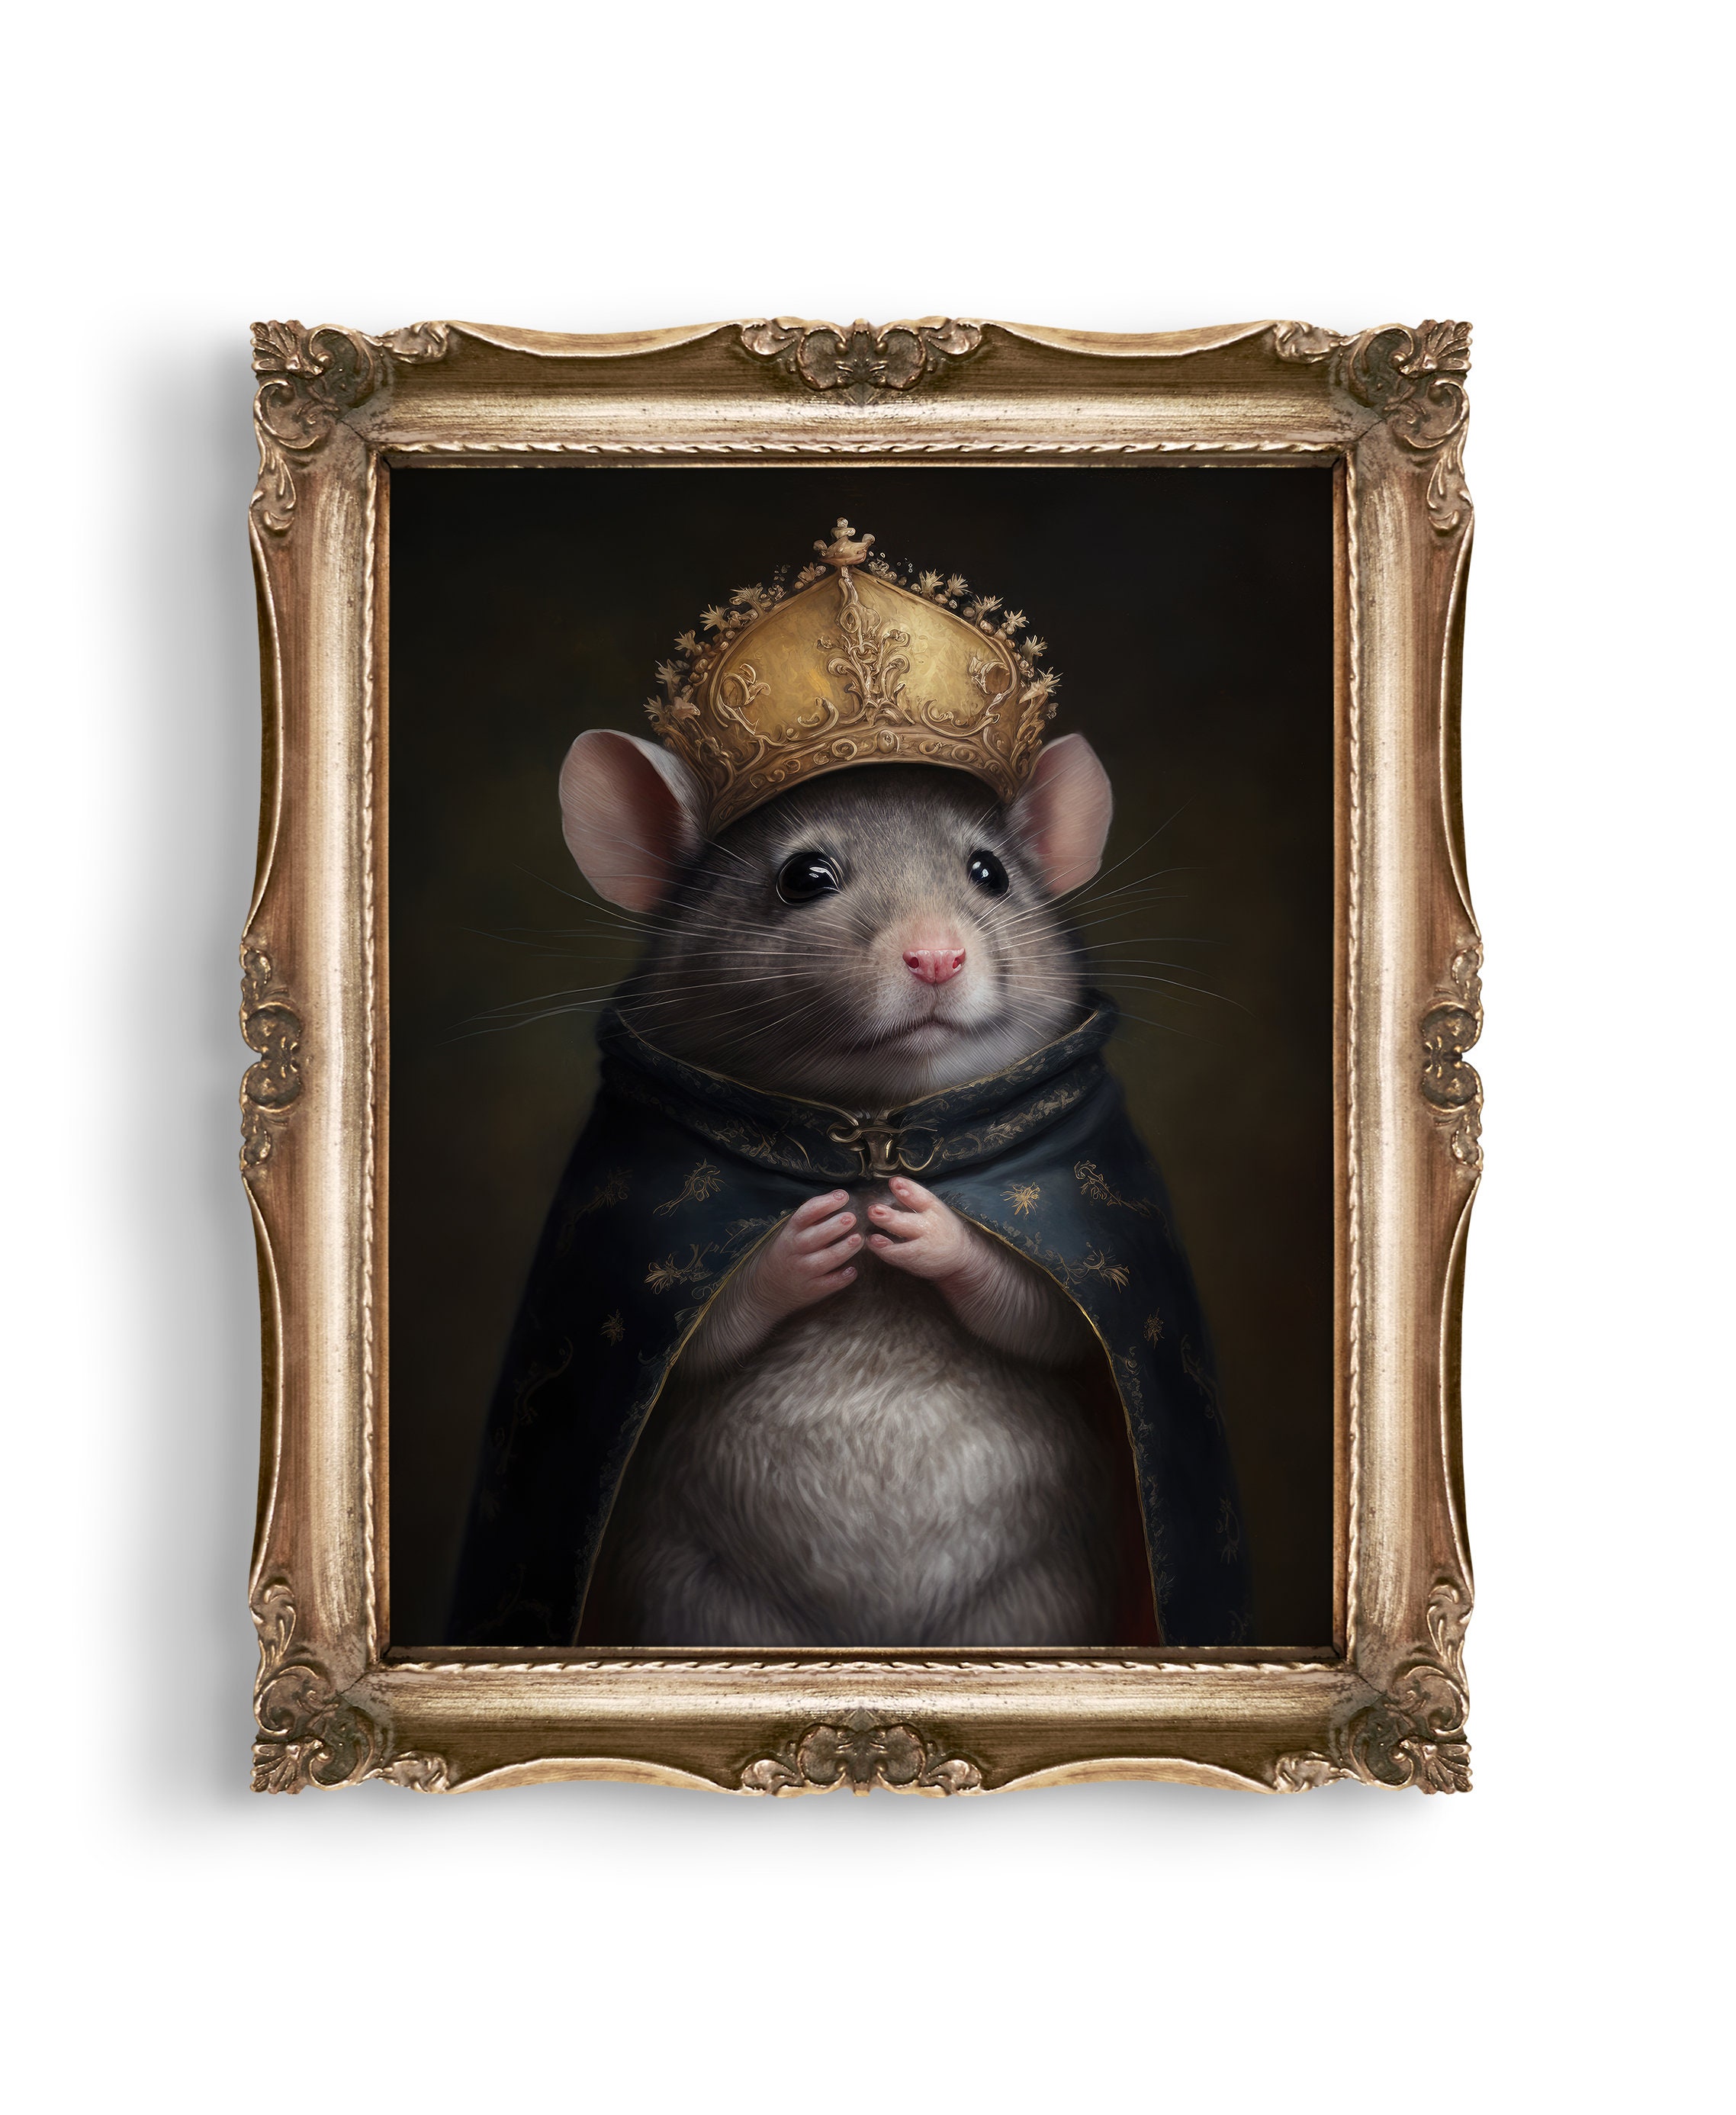 Rat King Print – andylargeart